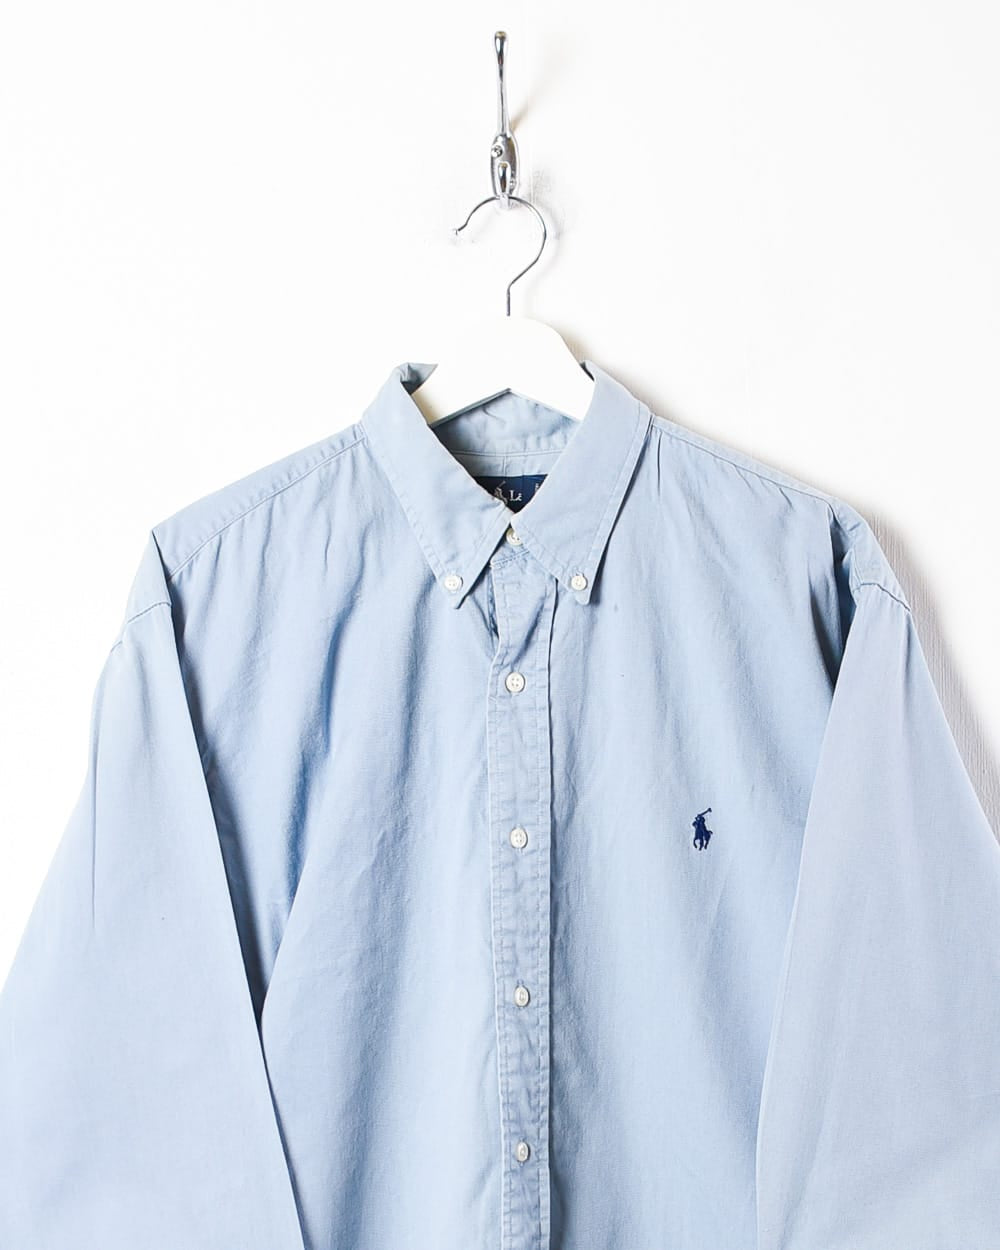 BabyBlue Polo Ralph Lauren Blaire Shirt - Medium